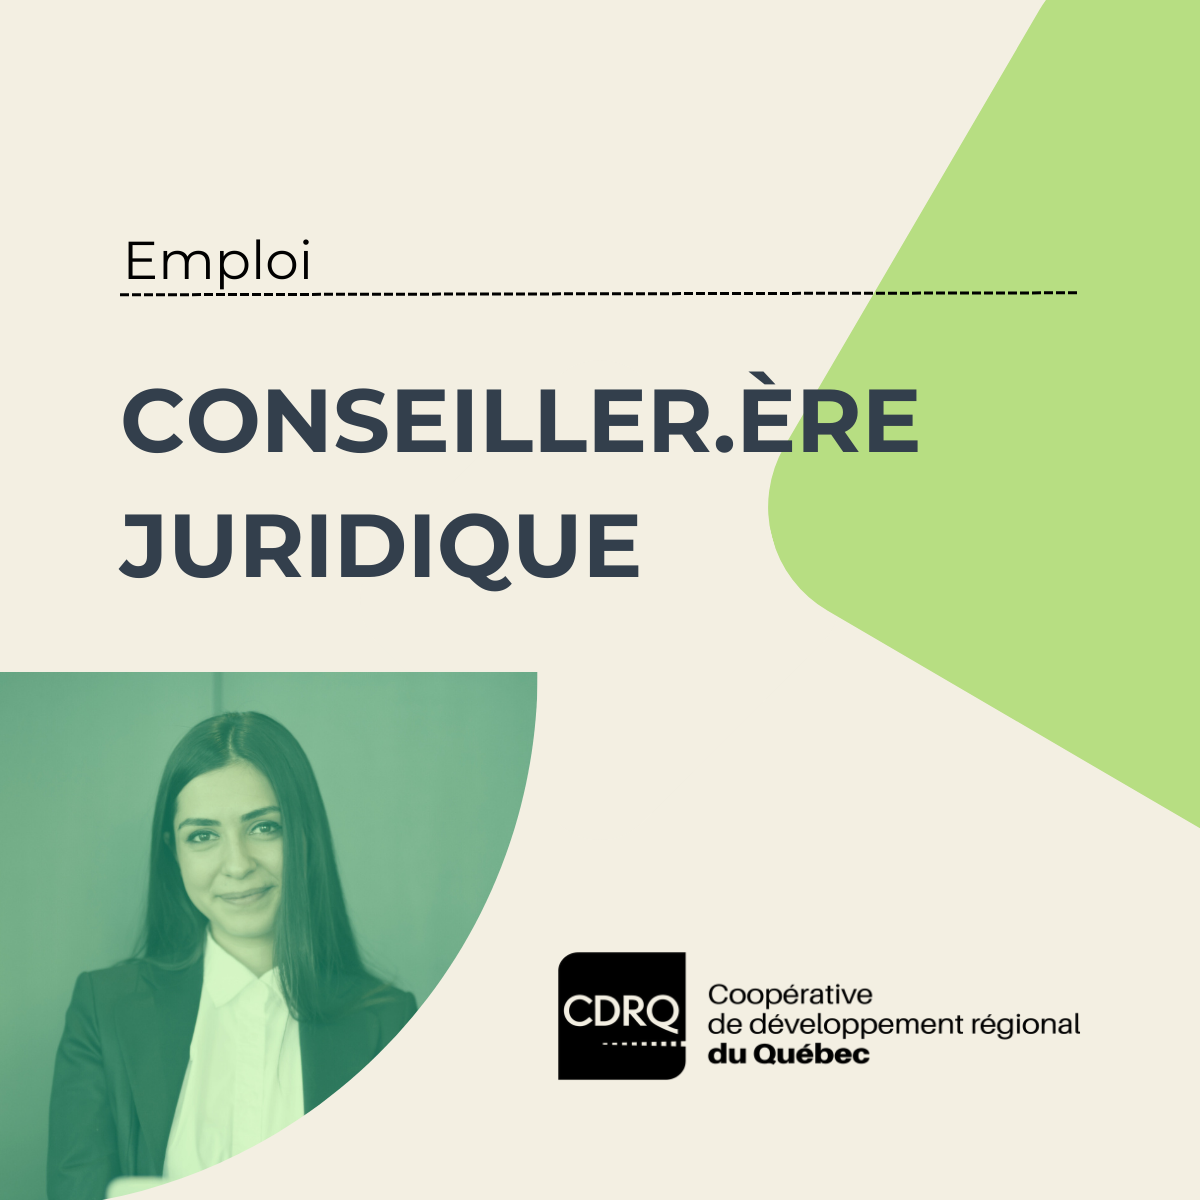 Emploi - Conseiller juridique - CDRQ